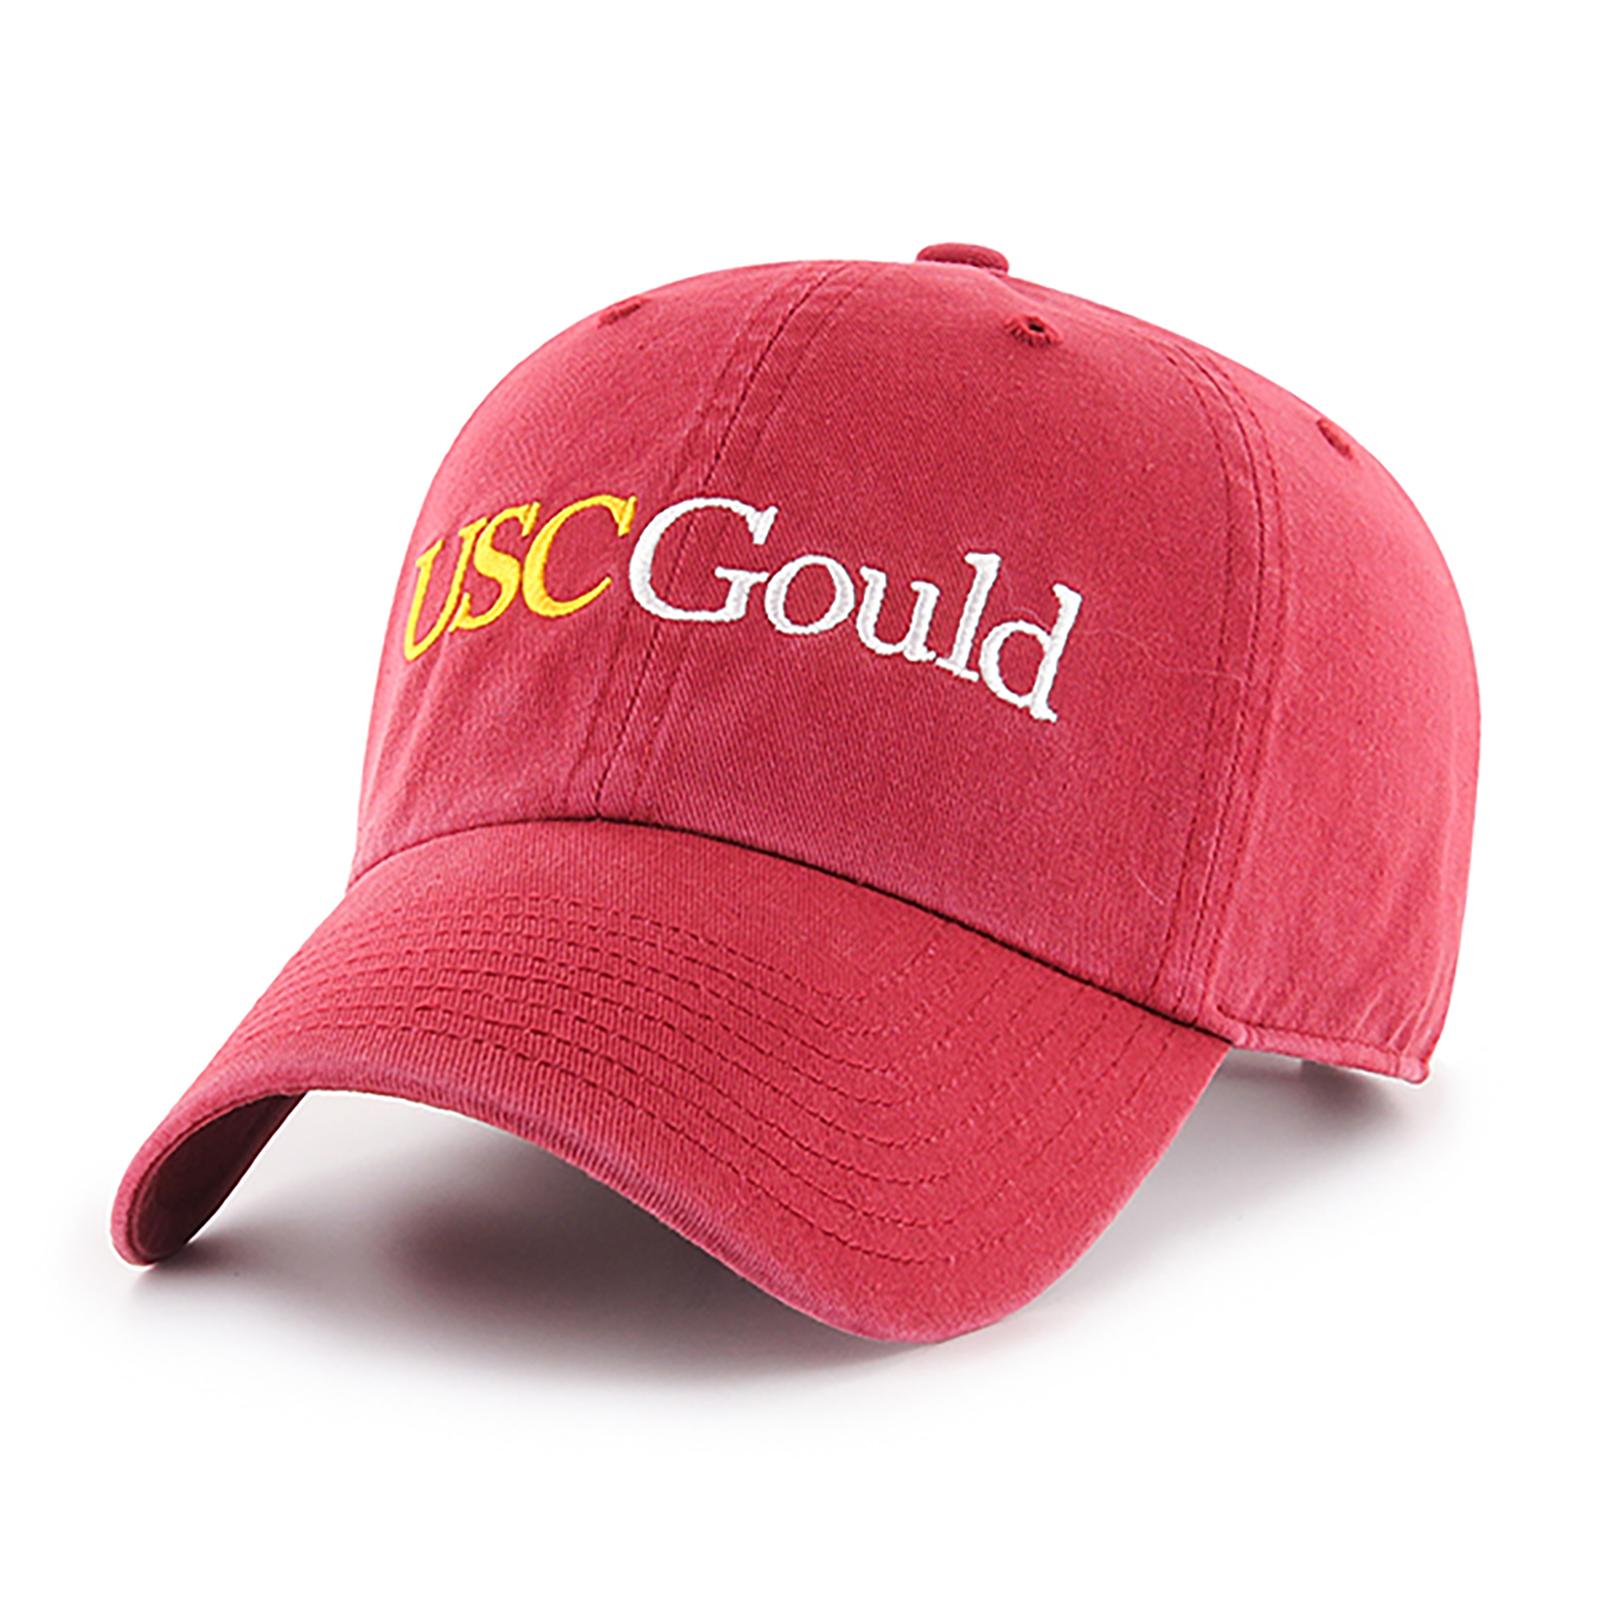 USC School of Gould Law Cap Cardinal image01